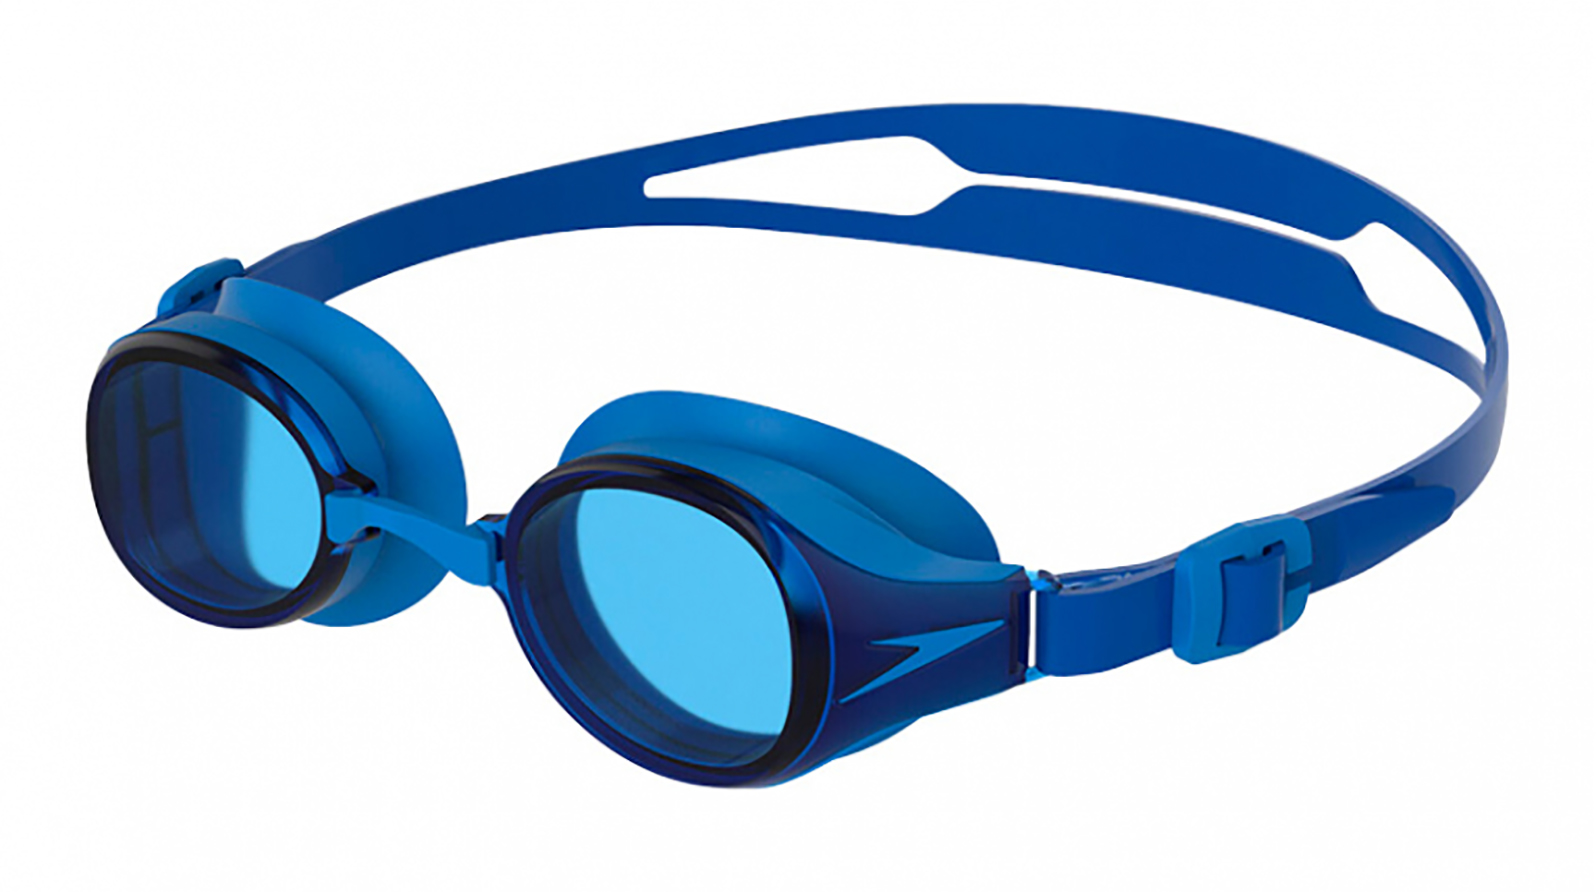 Speedo Очки для плавания Hydropure Optical F809 -4.0 speedo очки для плавания hydropure optical f809 5 5